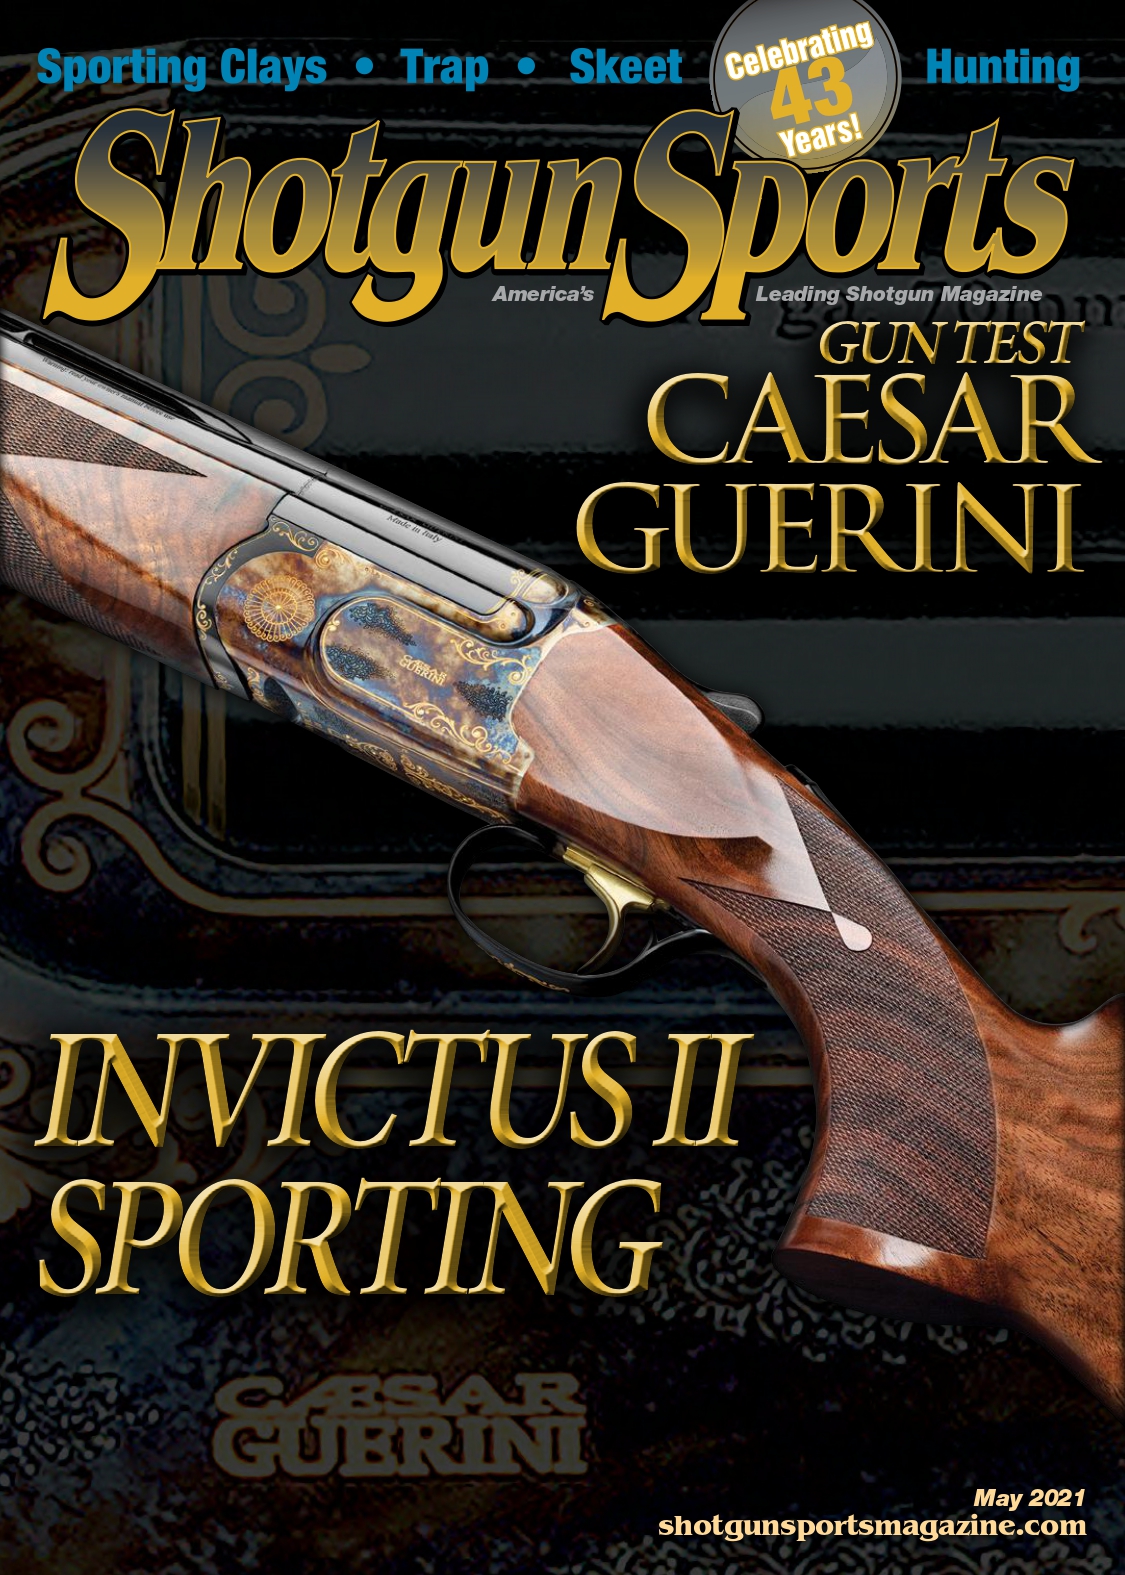 Invictus II Sporting – Shotgun Sports